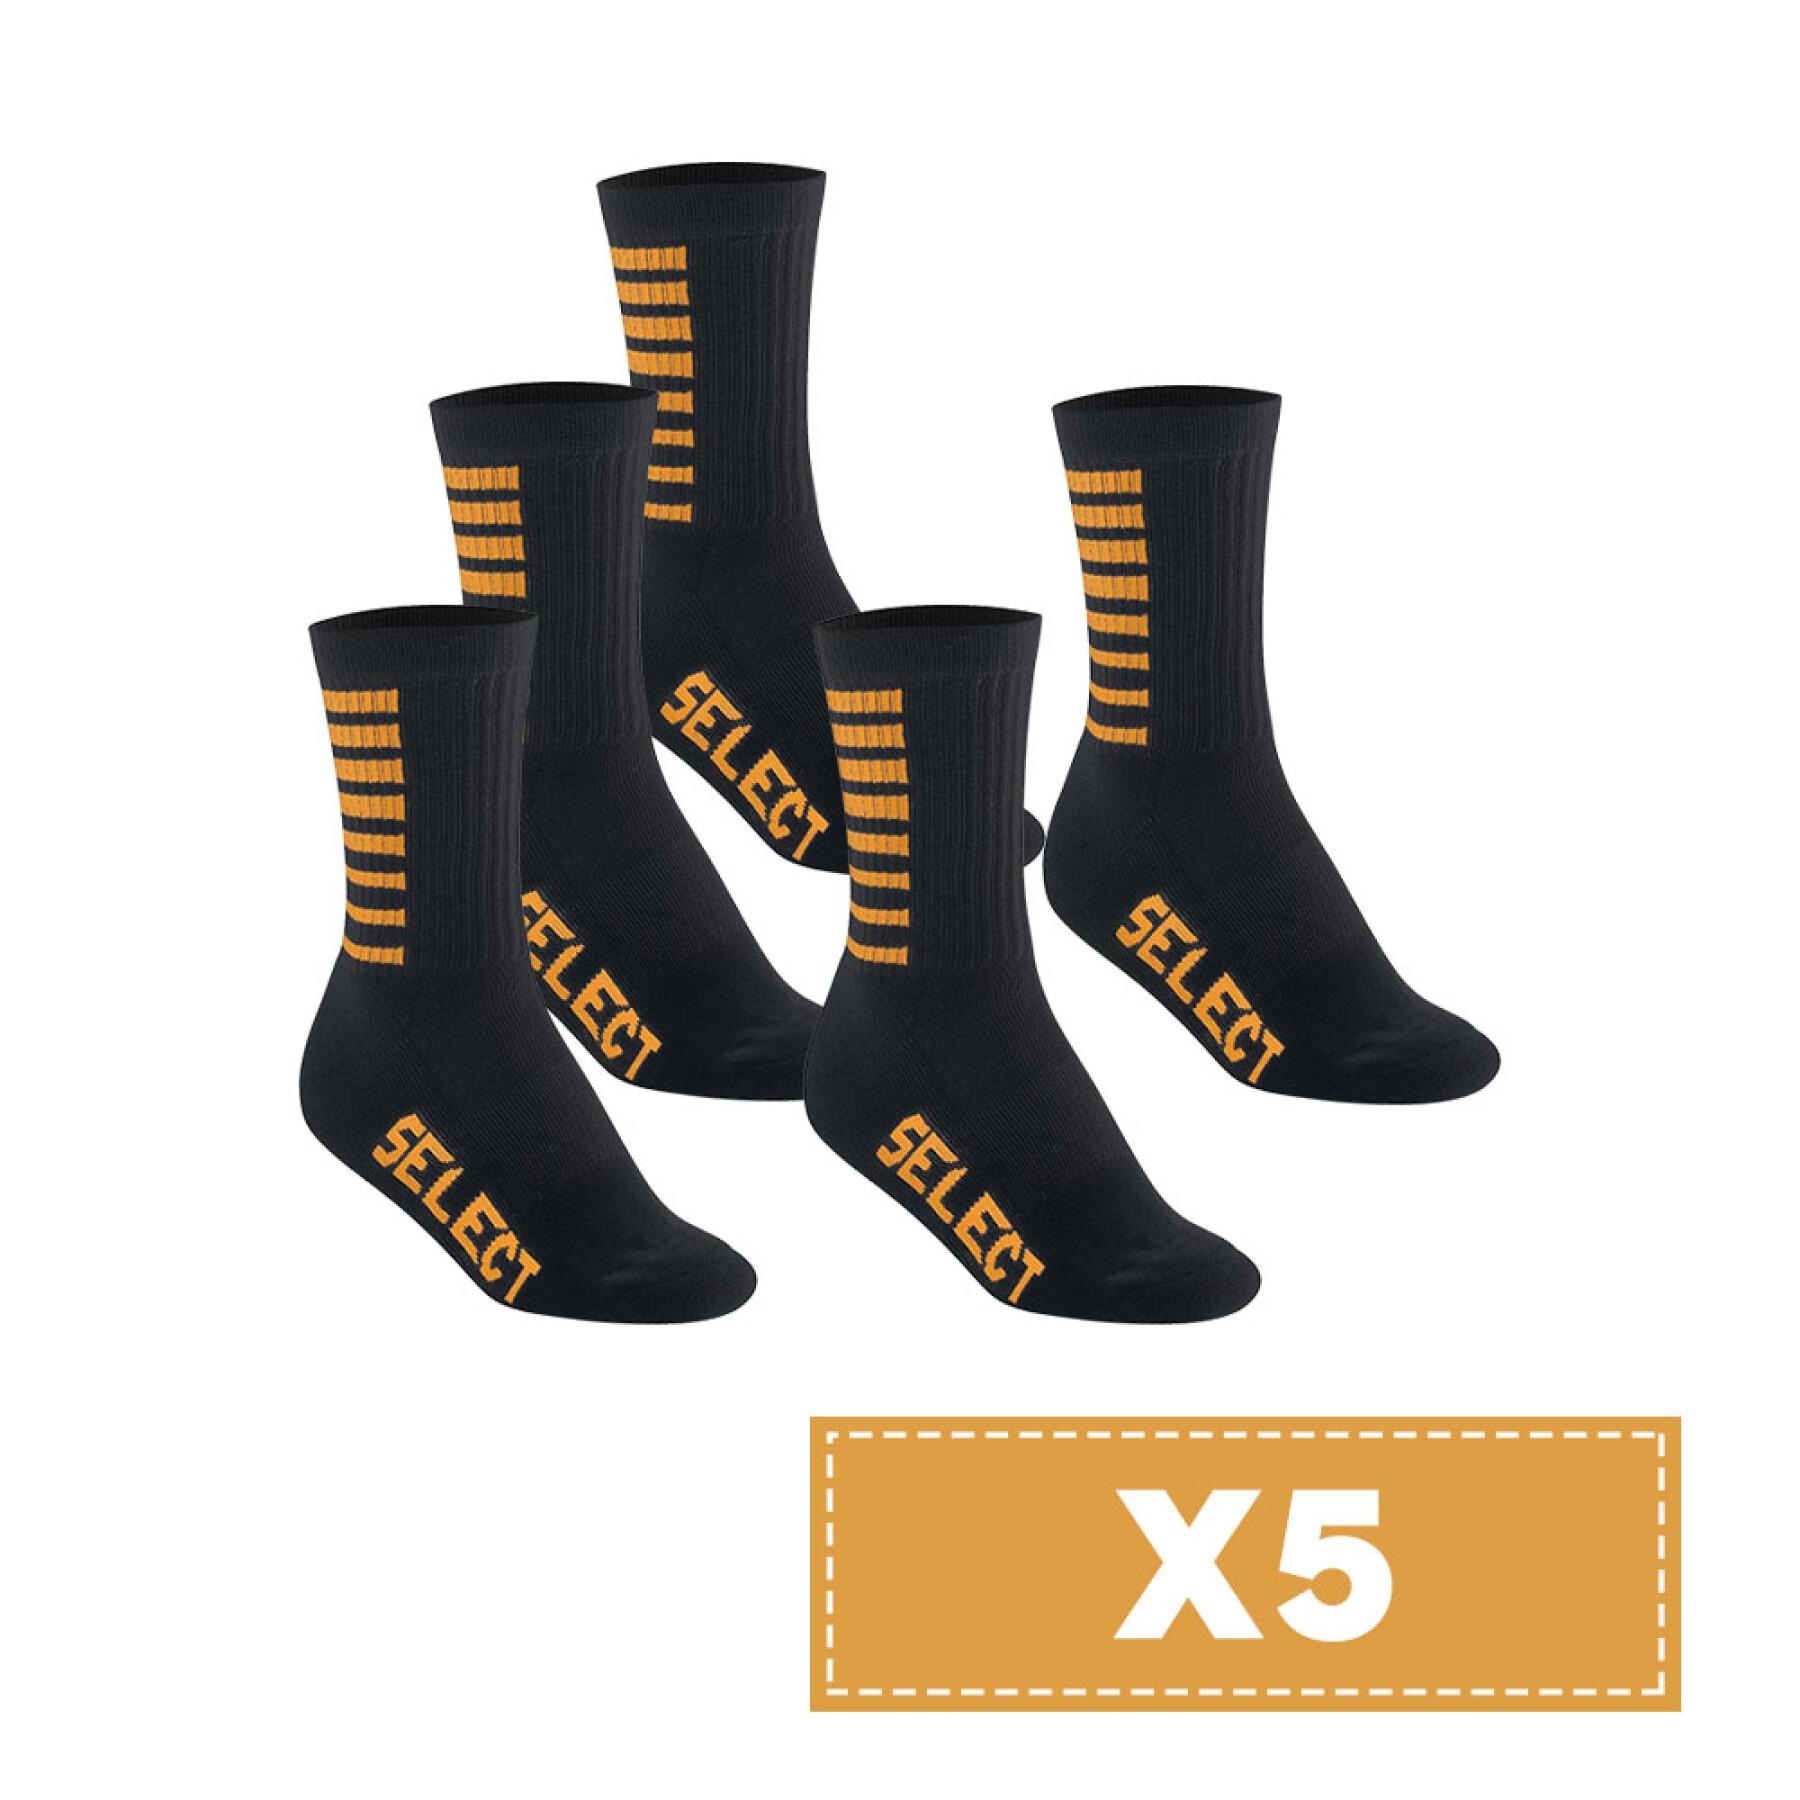 Lot of 5 pairs of socks Select Basic